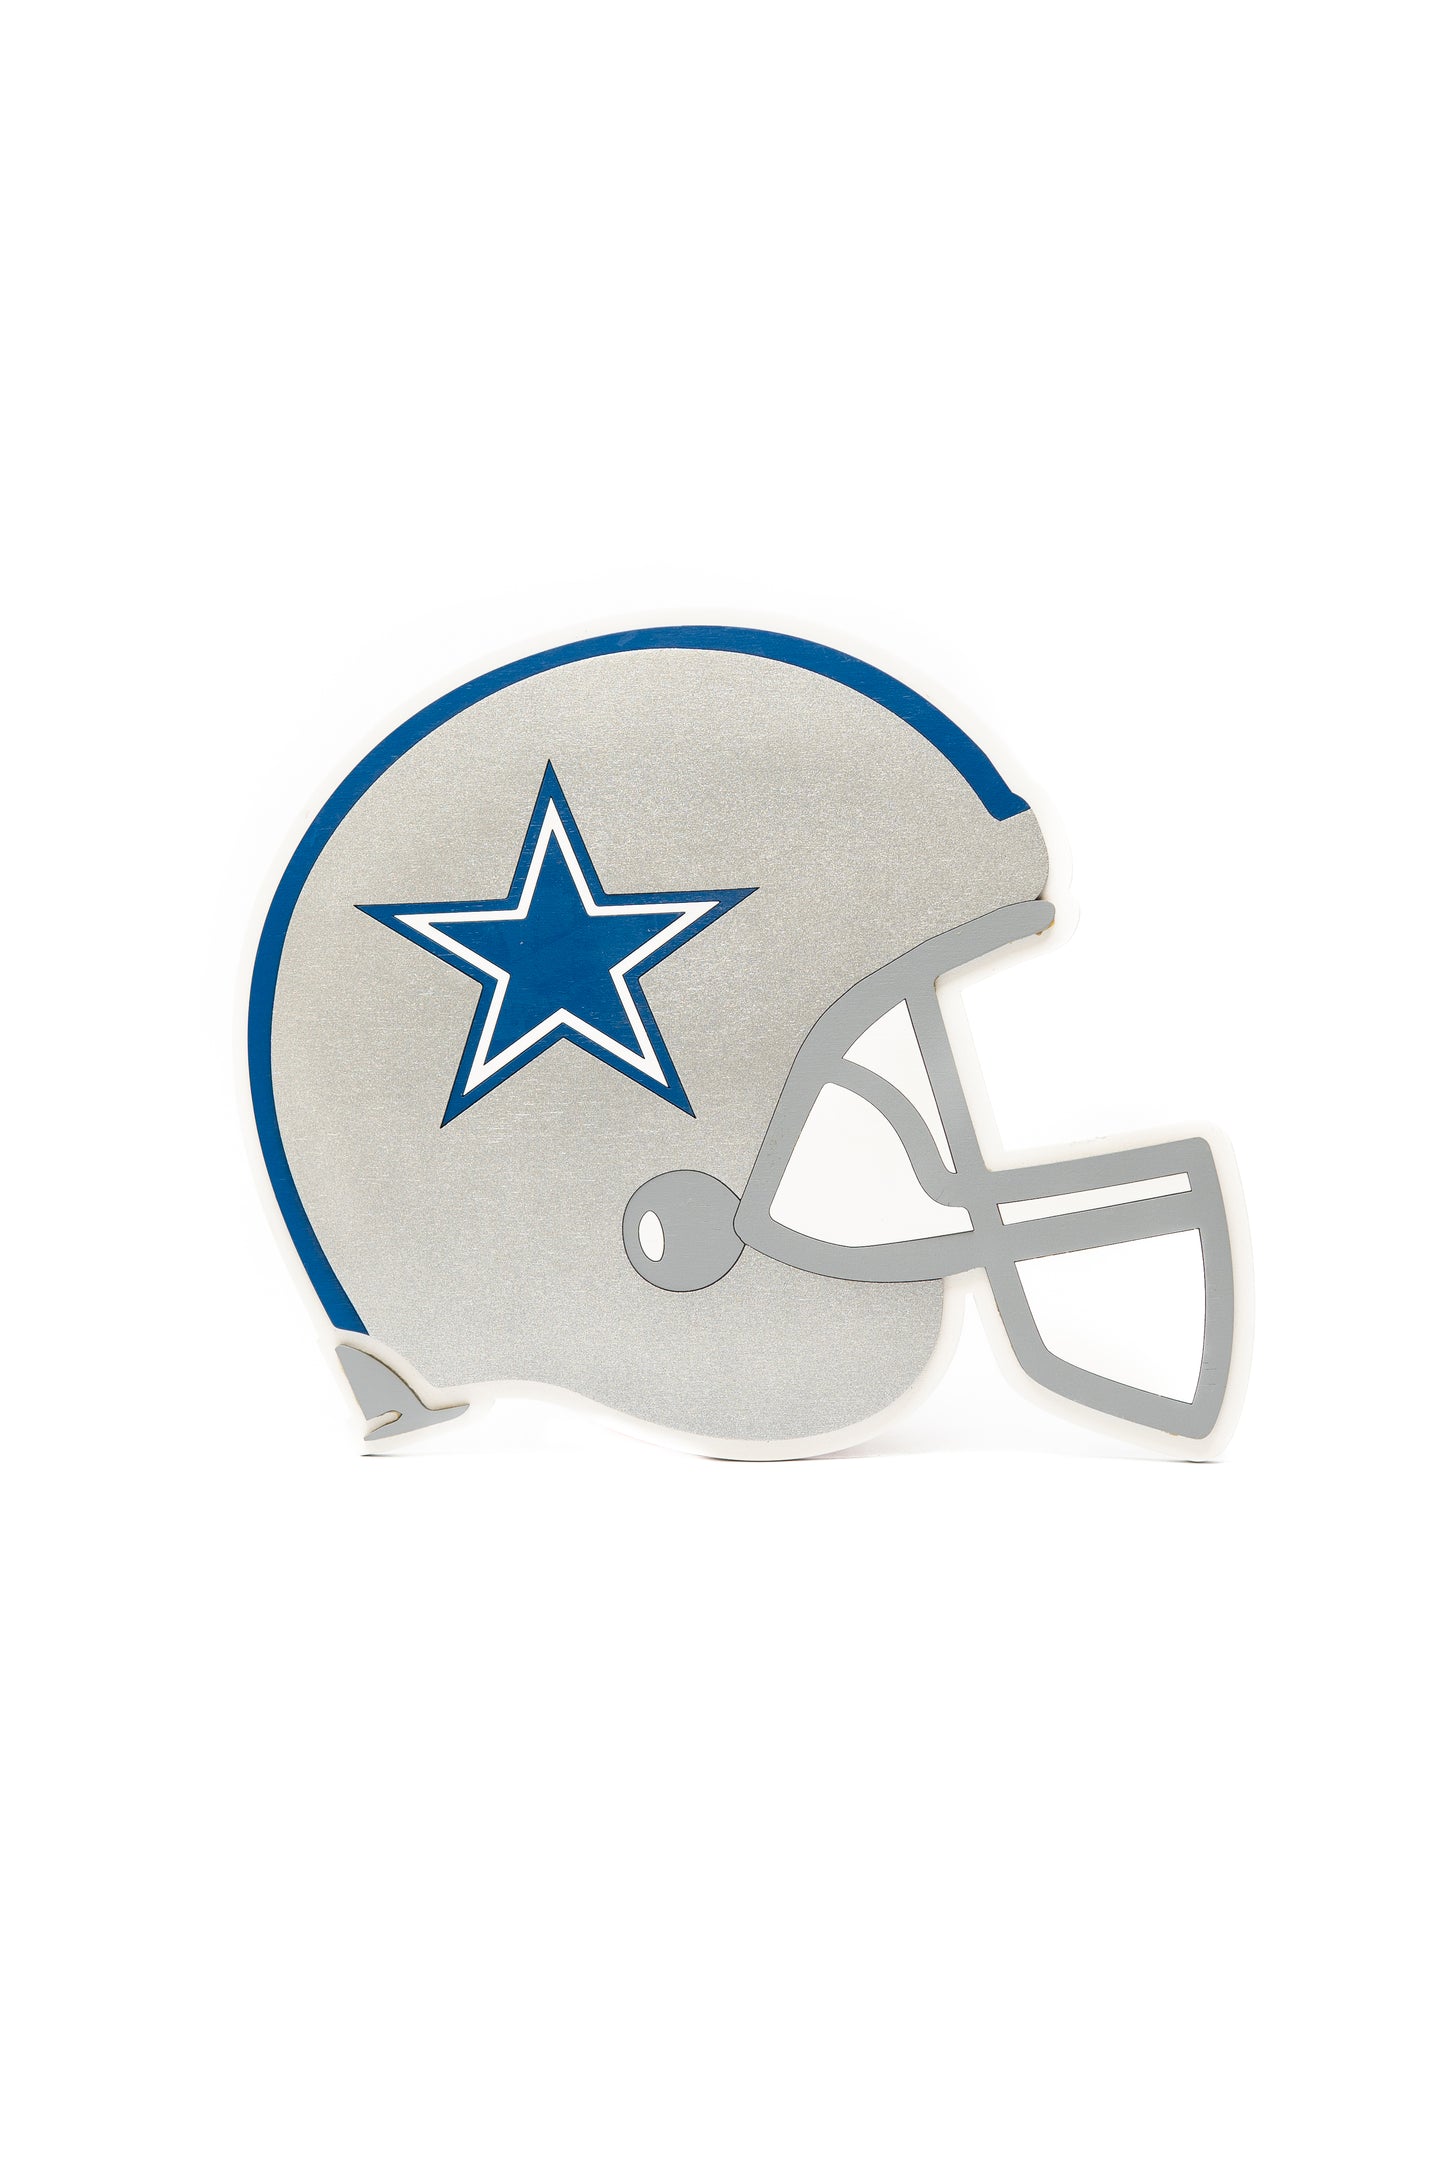 "Dallas Cowboys Helmet" Wooden Wall Art